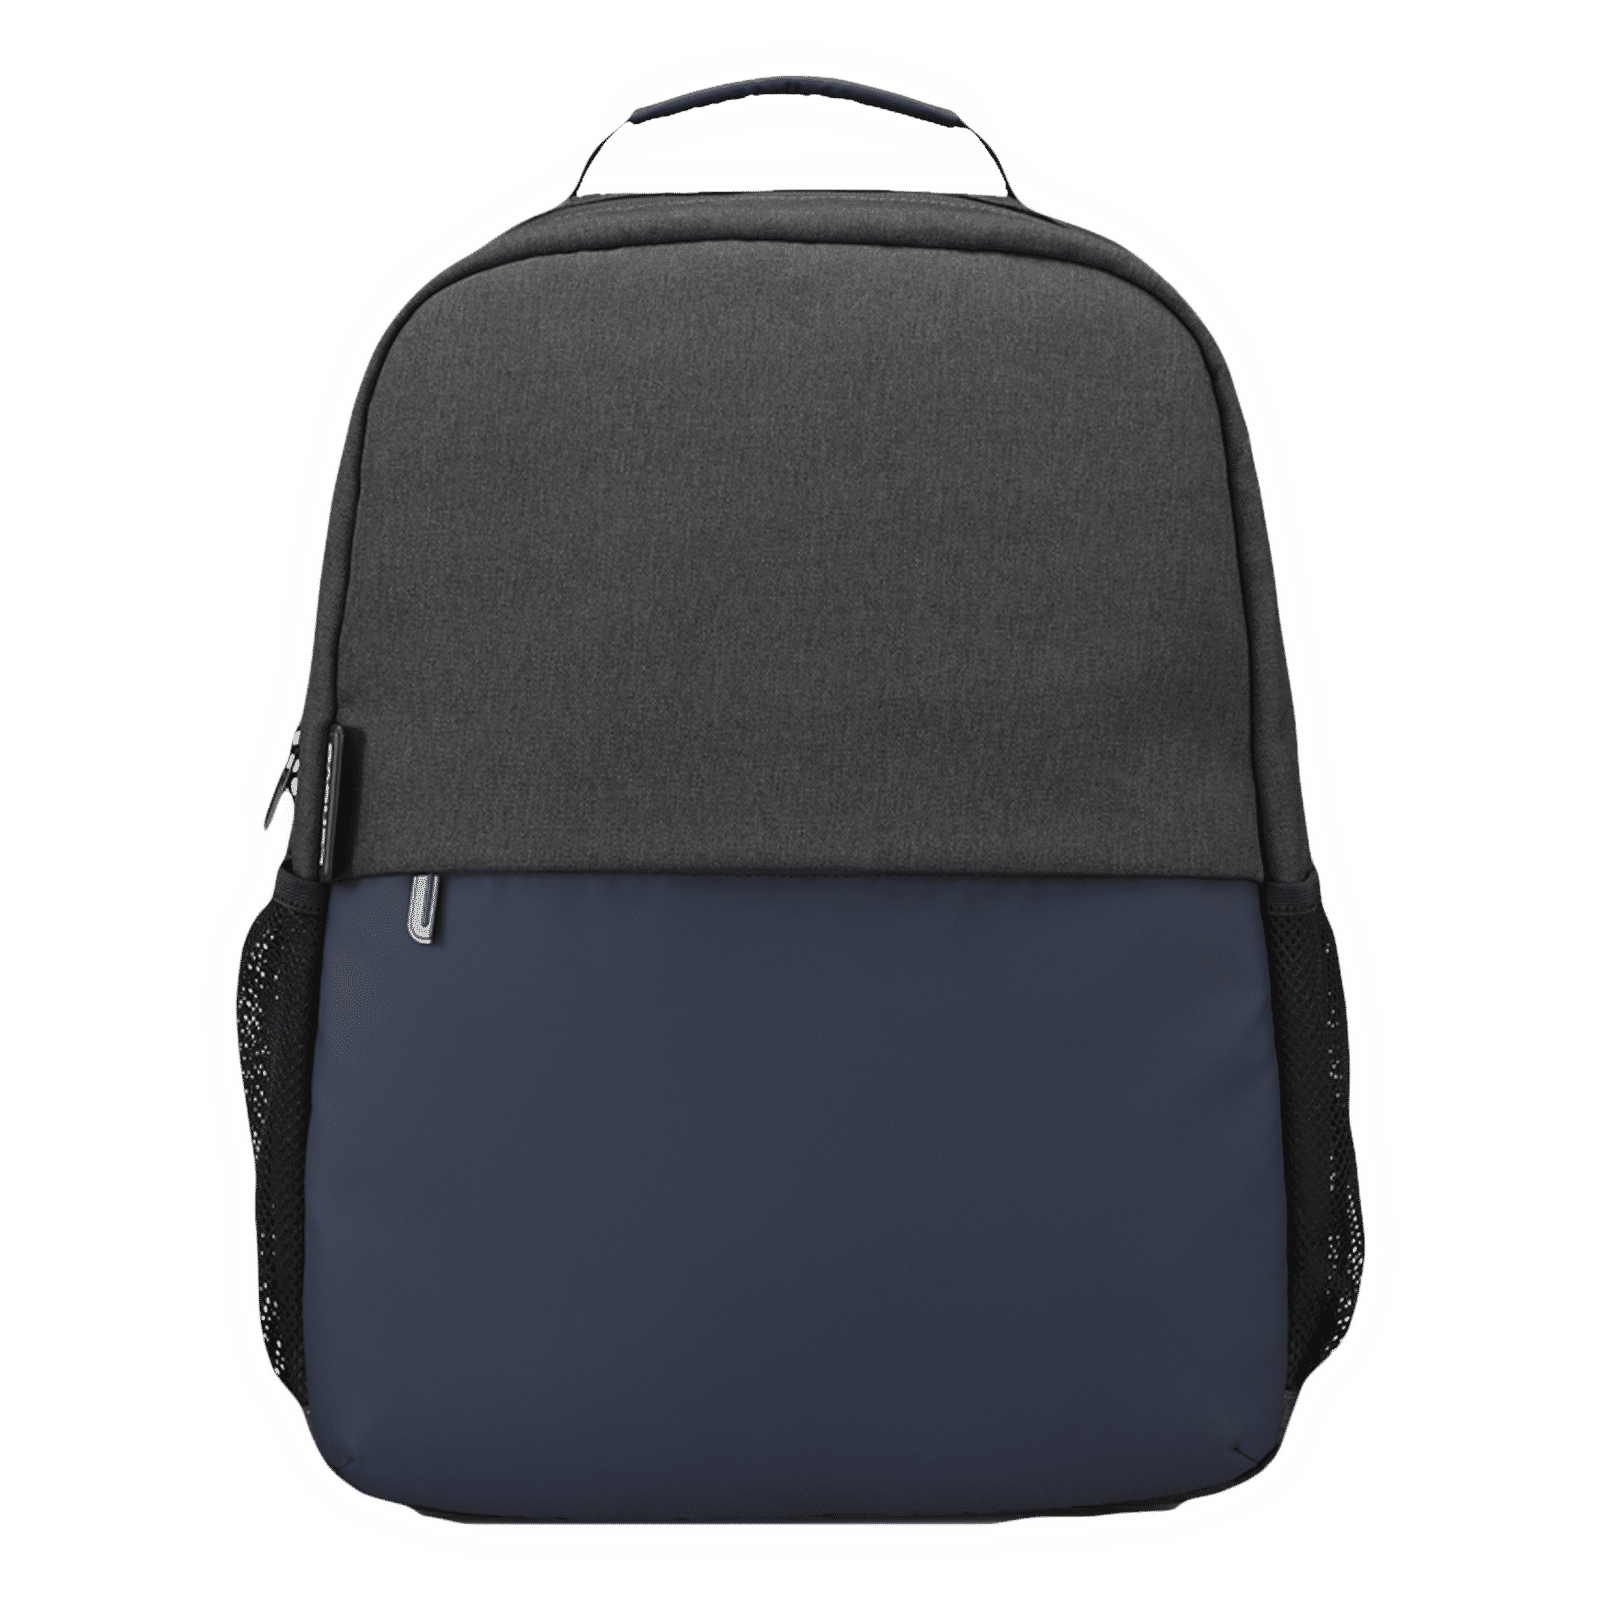 Artilea Slim Laptop Bag